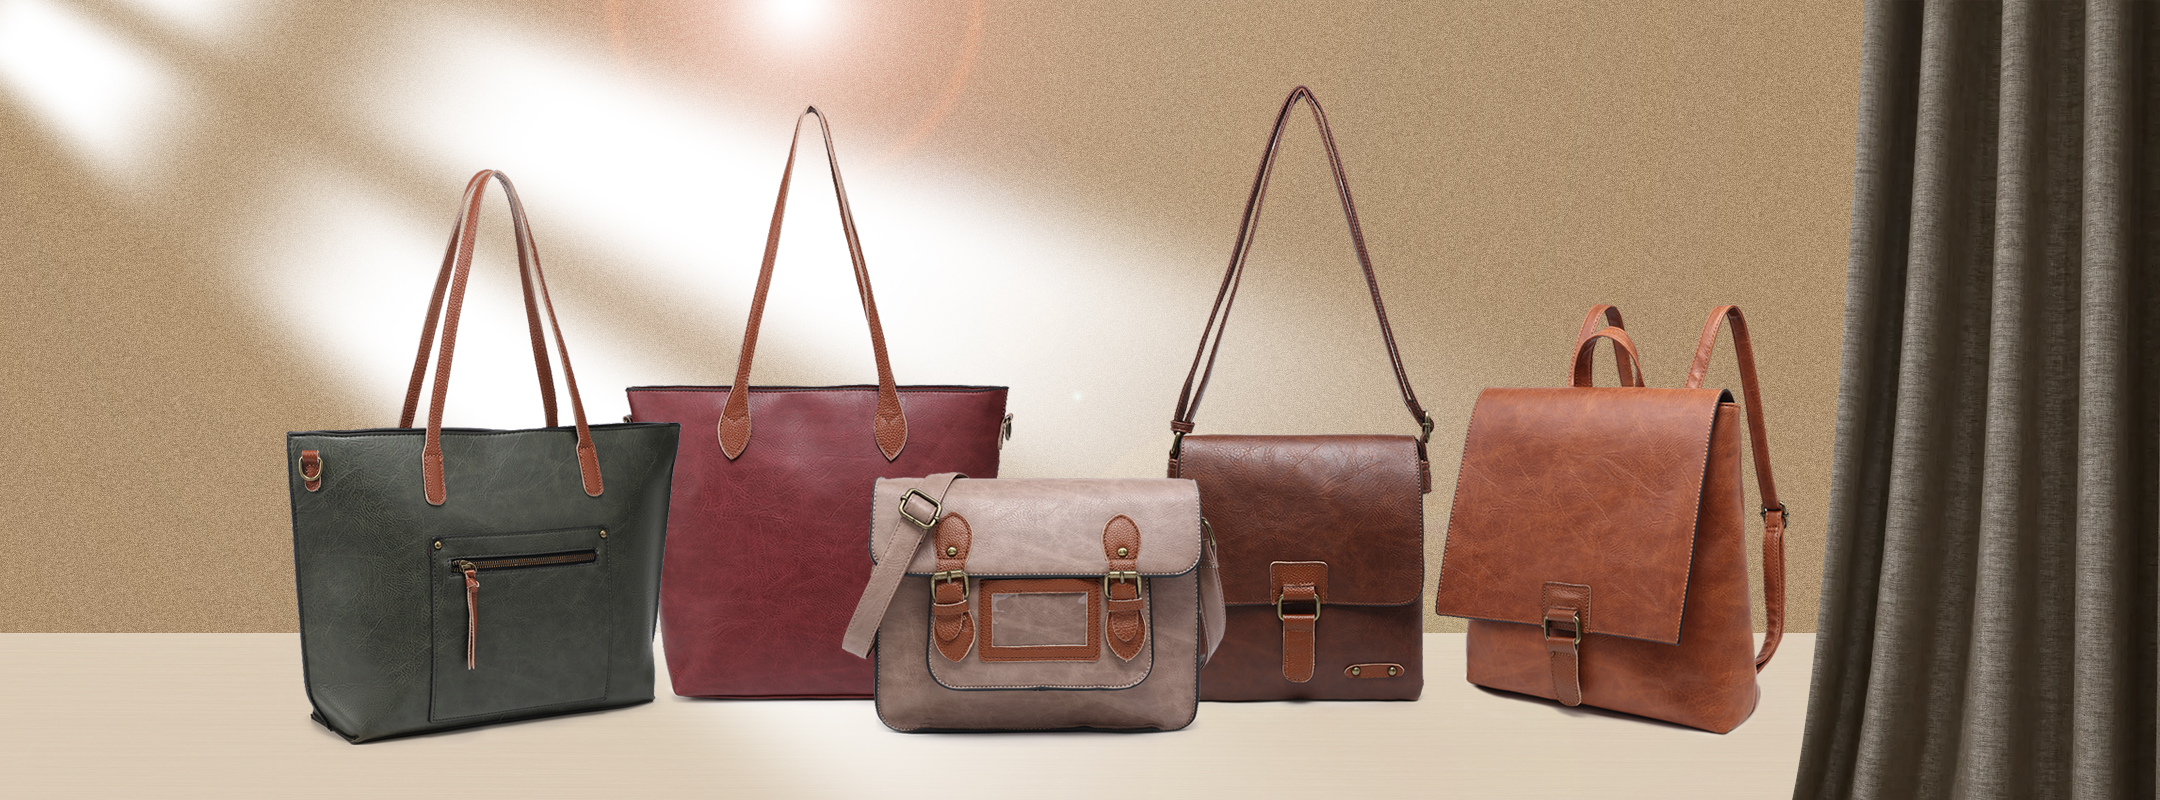 DANIELA MODA Vera Pelle Orange & Black Leather Purse Handbag | eBay